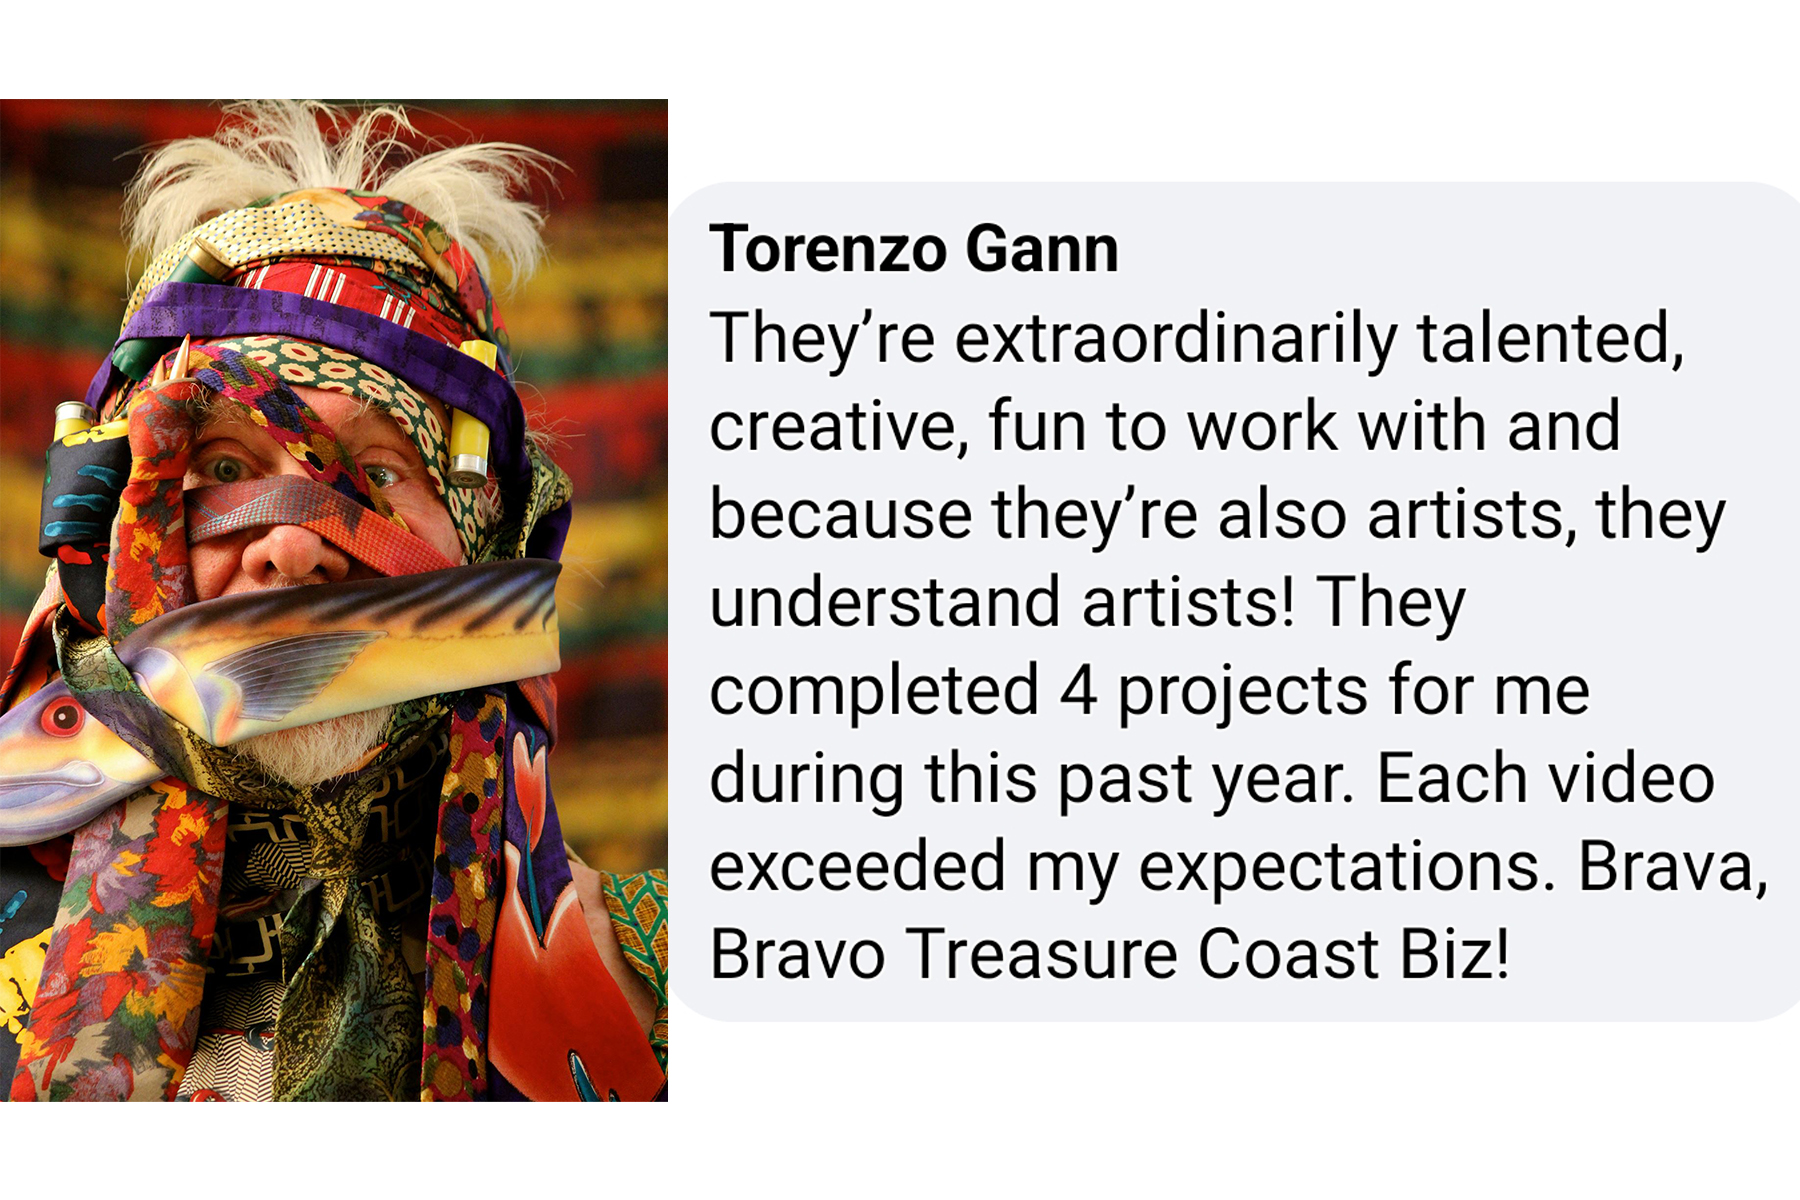 Torenzo Gann Fine Art. Treasure Coast Biz - MCLM Media Pro Photography and Video Production, Stuart, Martin County, Florida